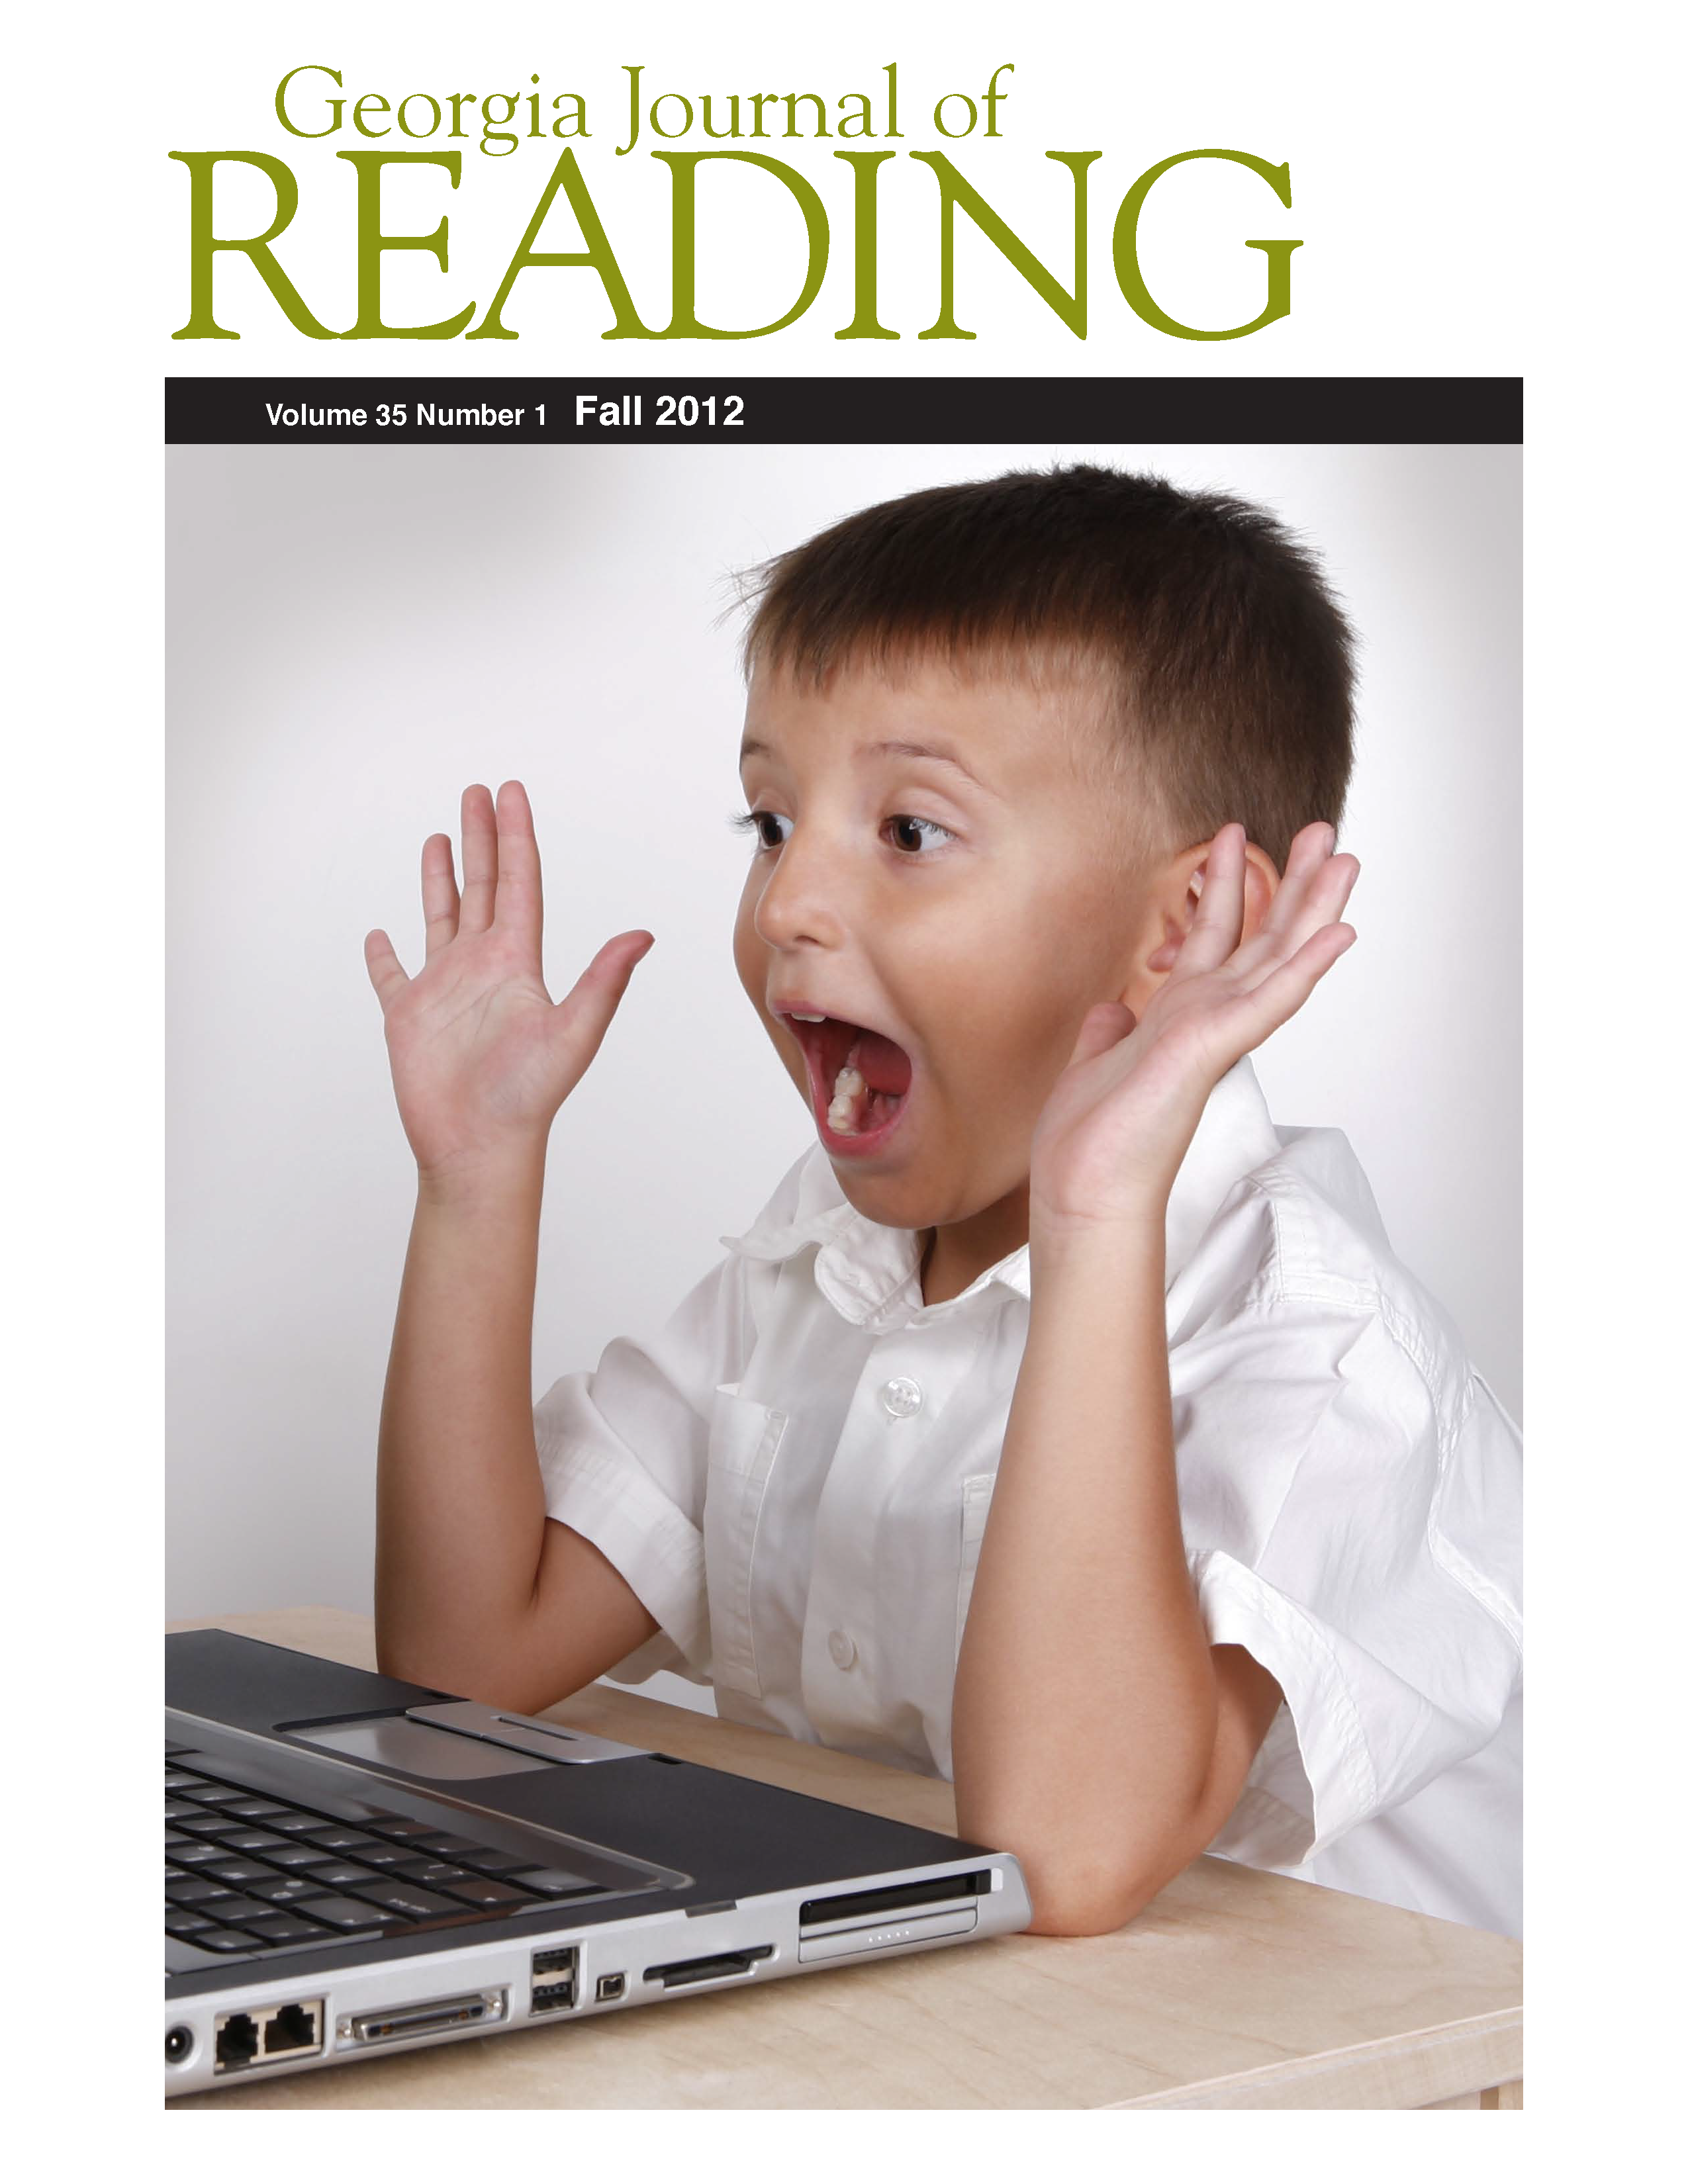 Georgia Journal of Reading (Fall 2012)